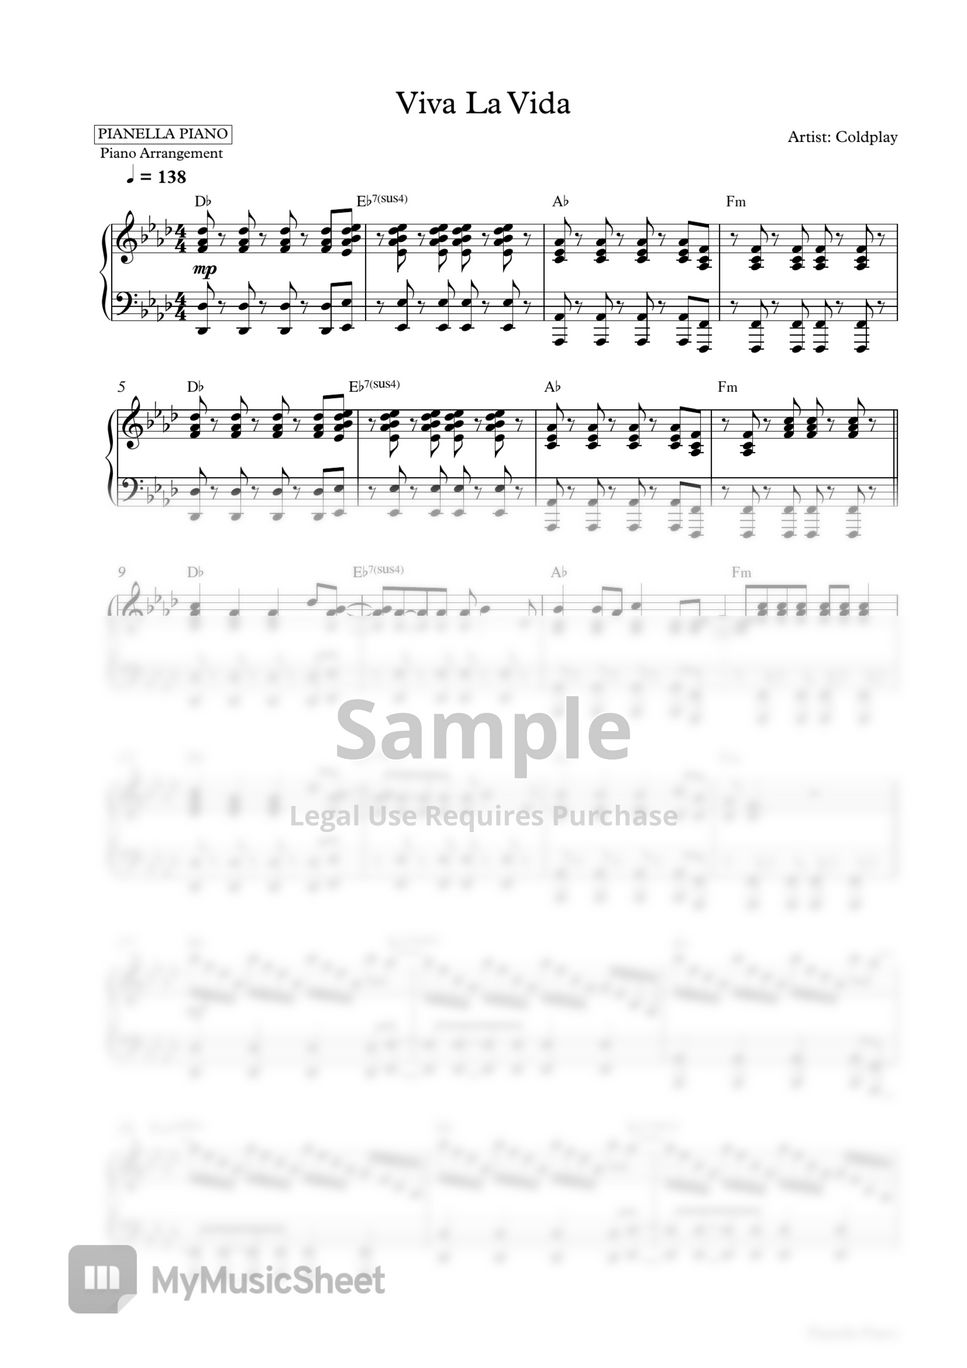 Coldplay - Viva La Vida (Piano Sheet) by Pianella Piano